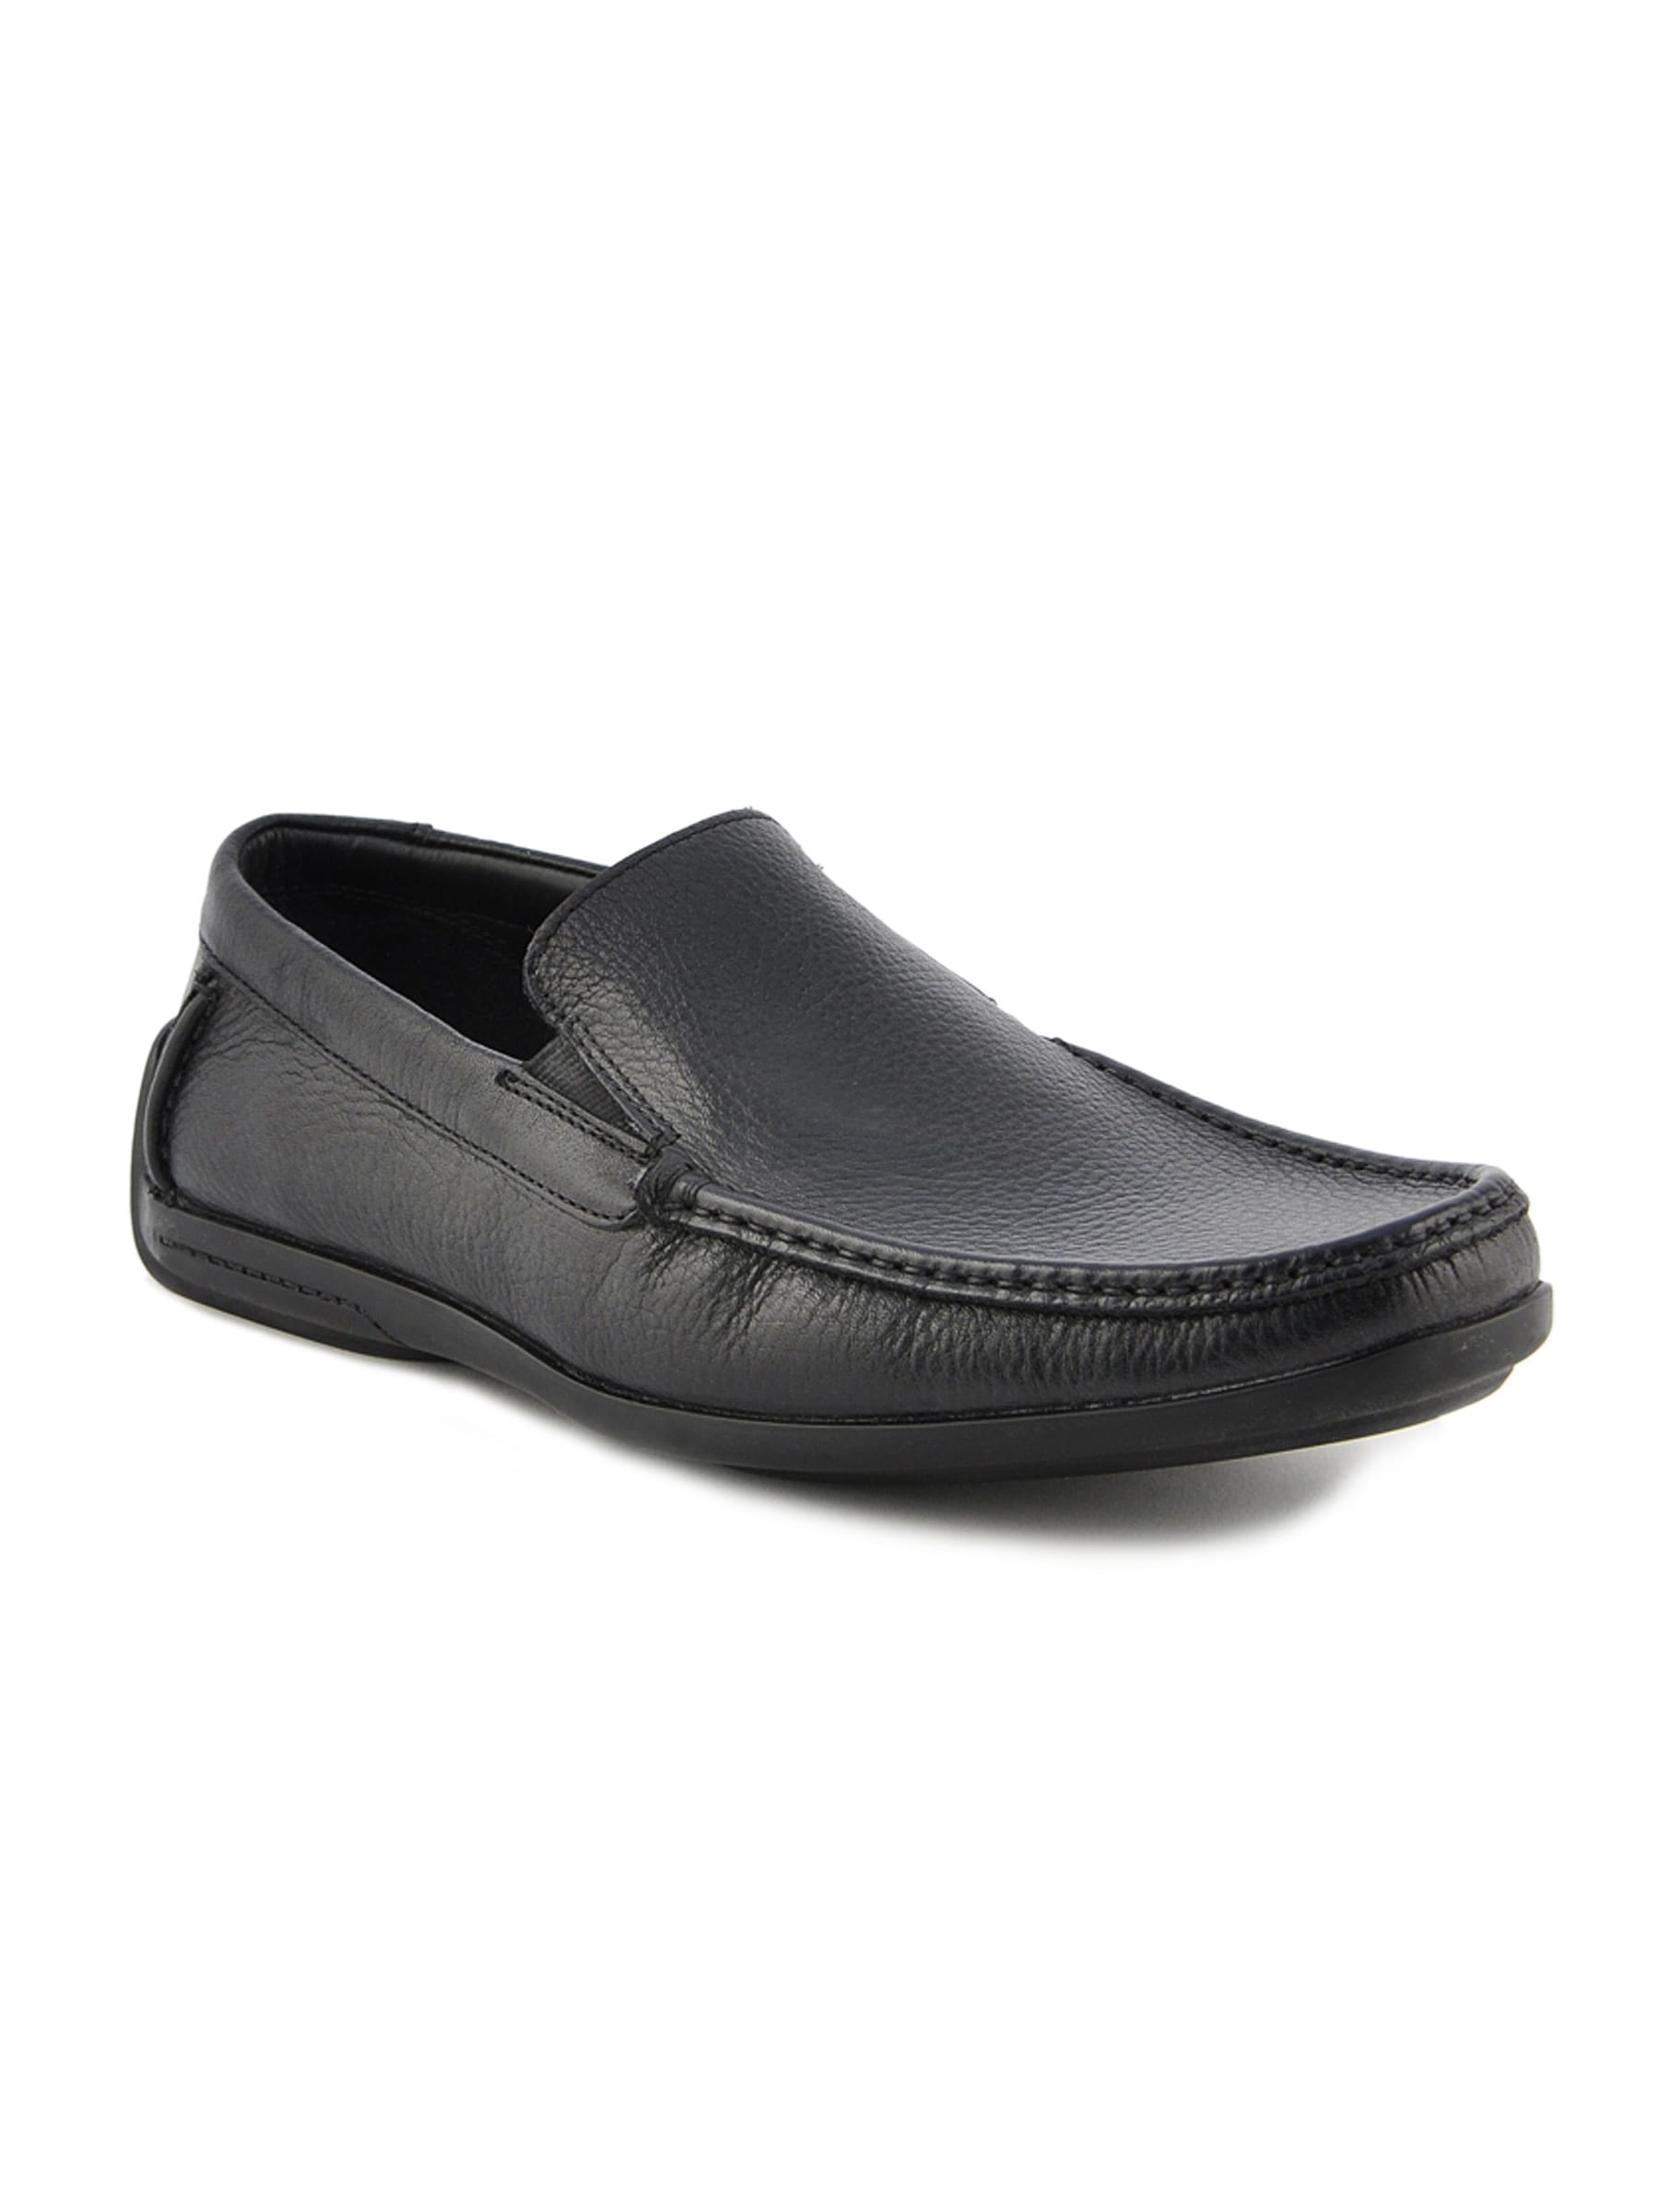 Clarks Men Black Leather Loafers